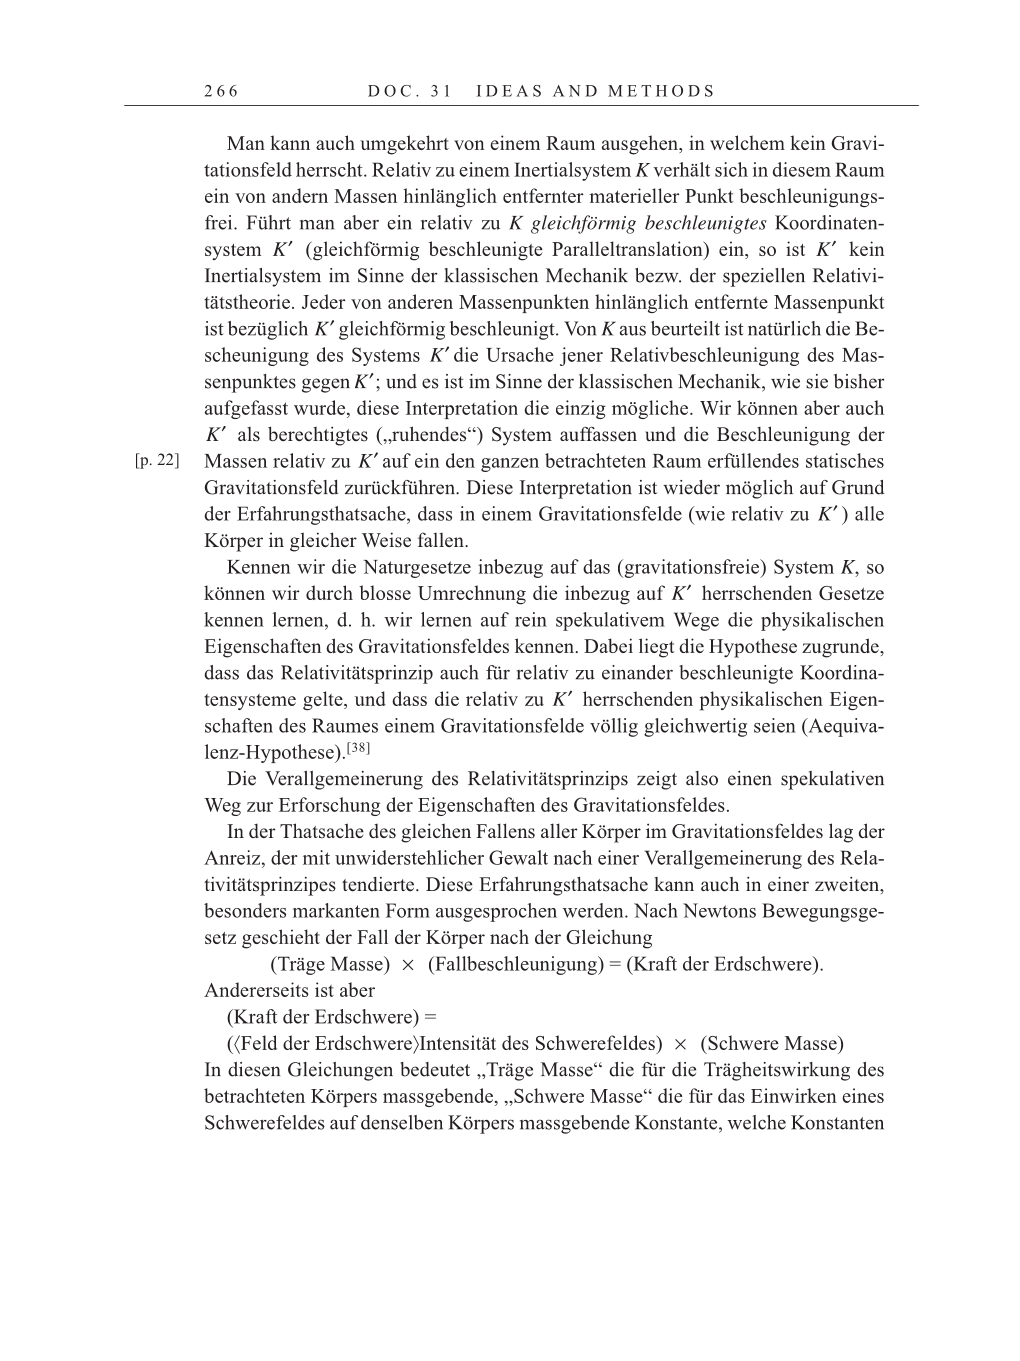 Volume 7: The Berlin Years: Writings, 1918-1921 page 266